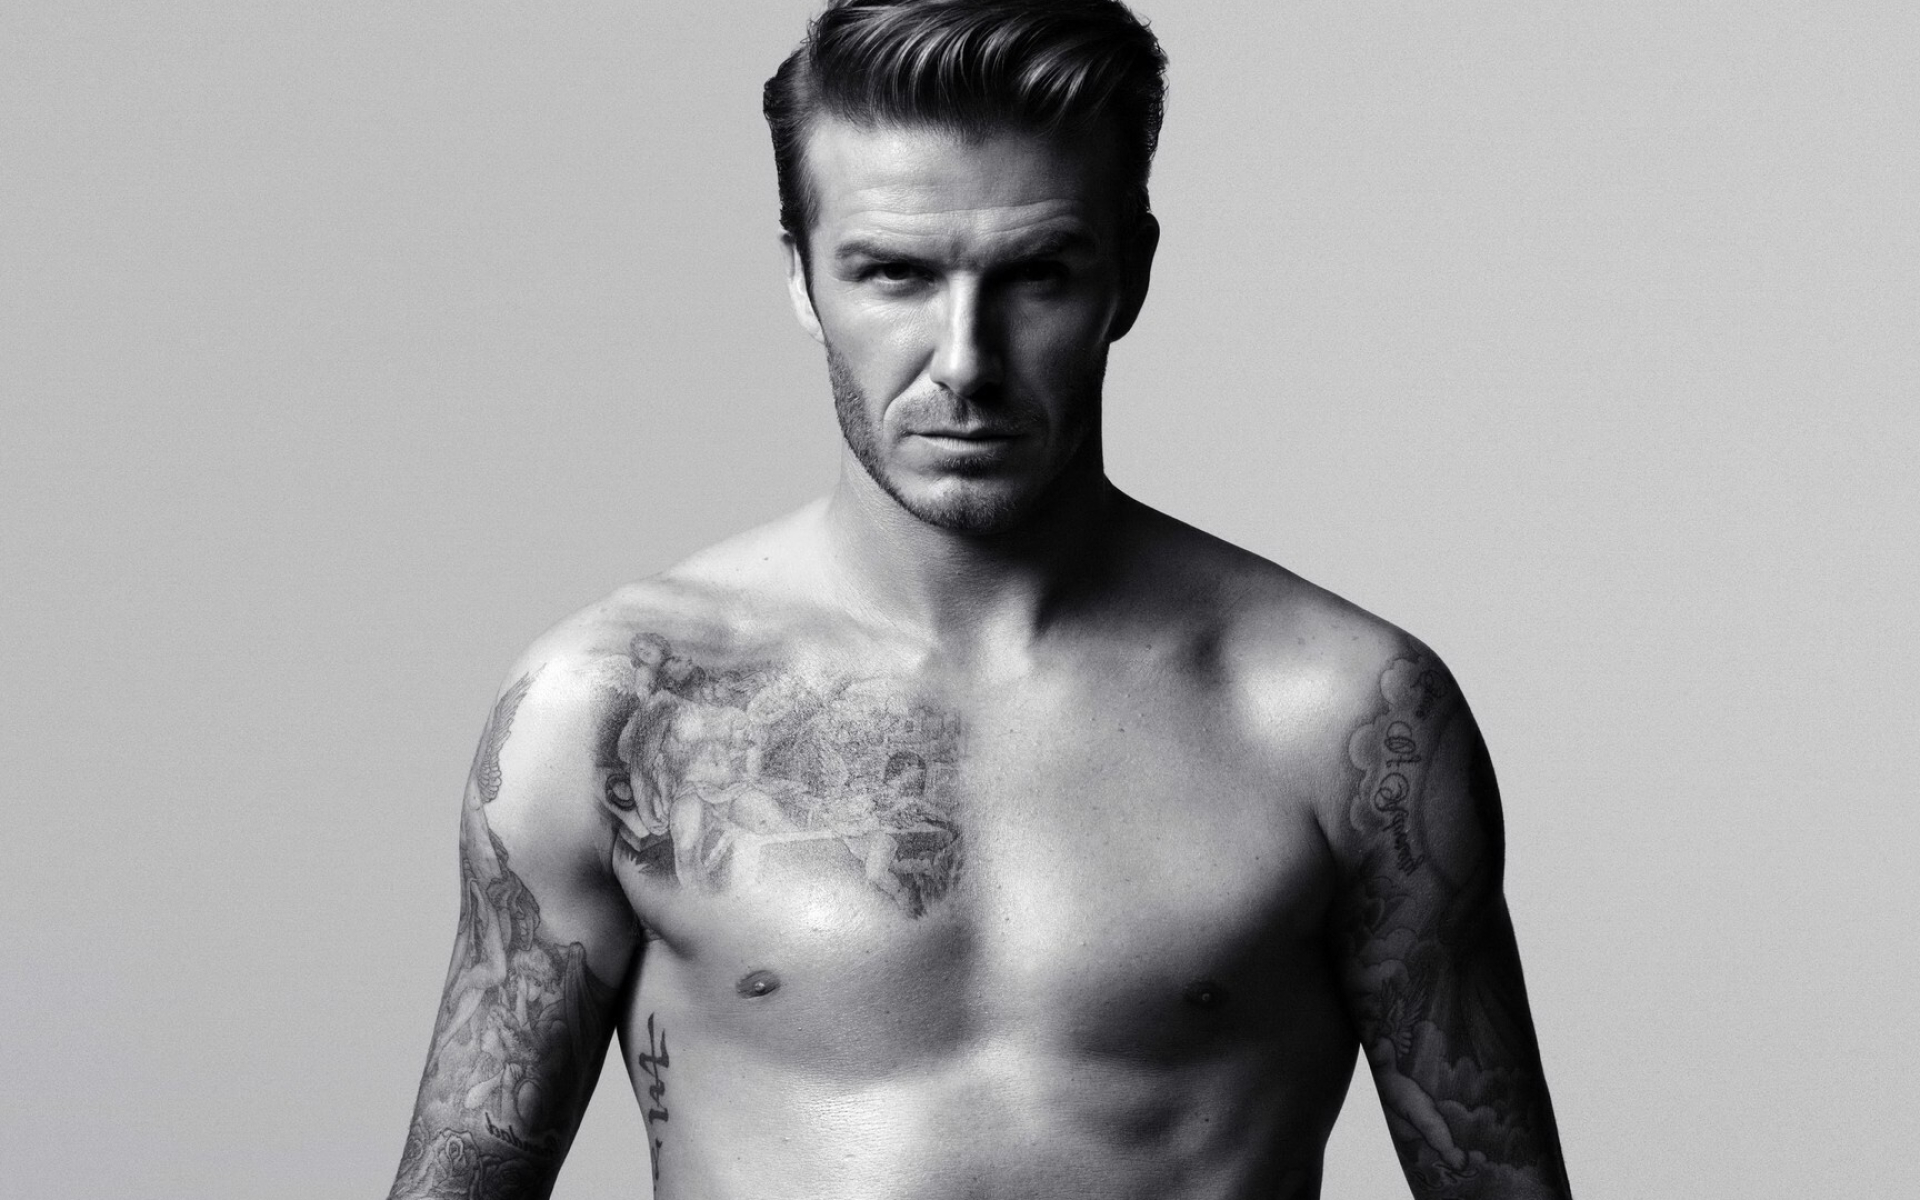 David Beckham: Made 81 Champions League appearances, scoring 15 goals for Manchester United. 1920x1200 HD Wallpaper.